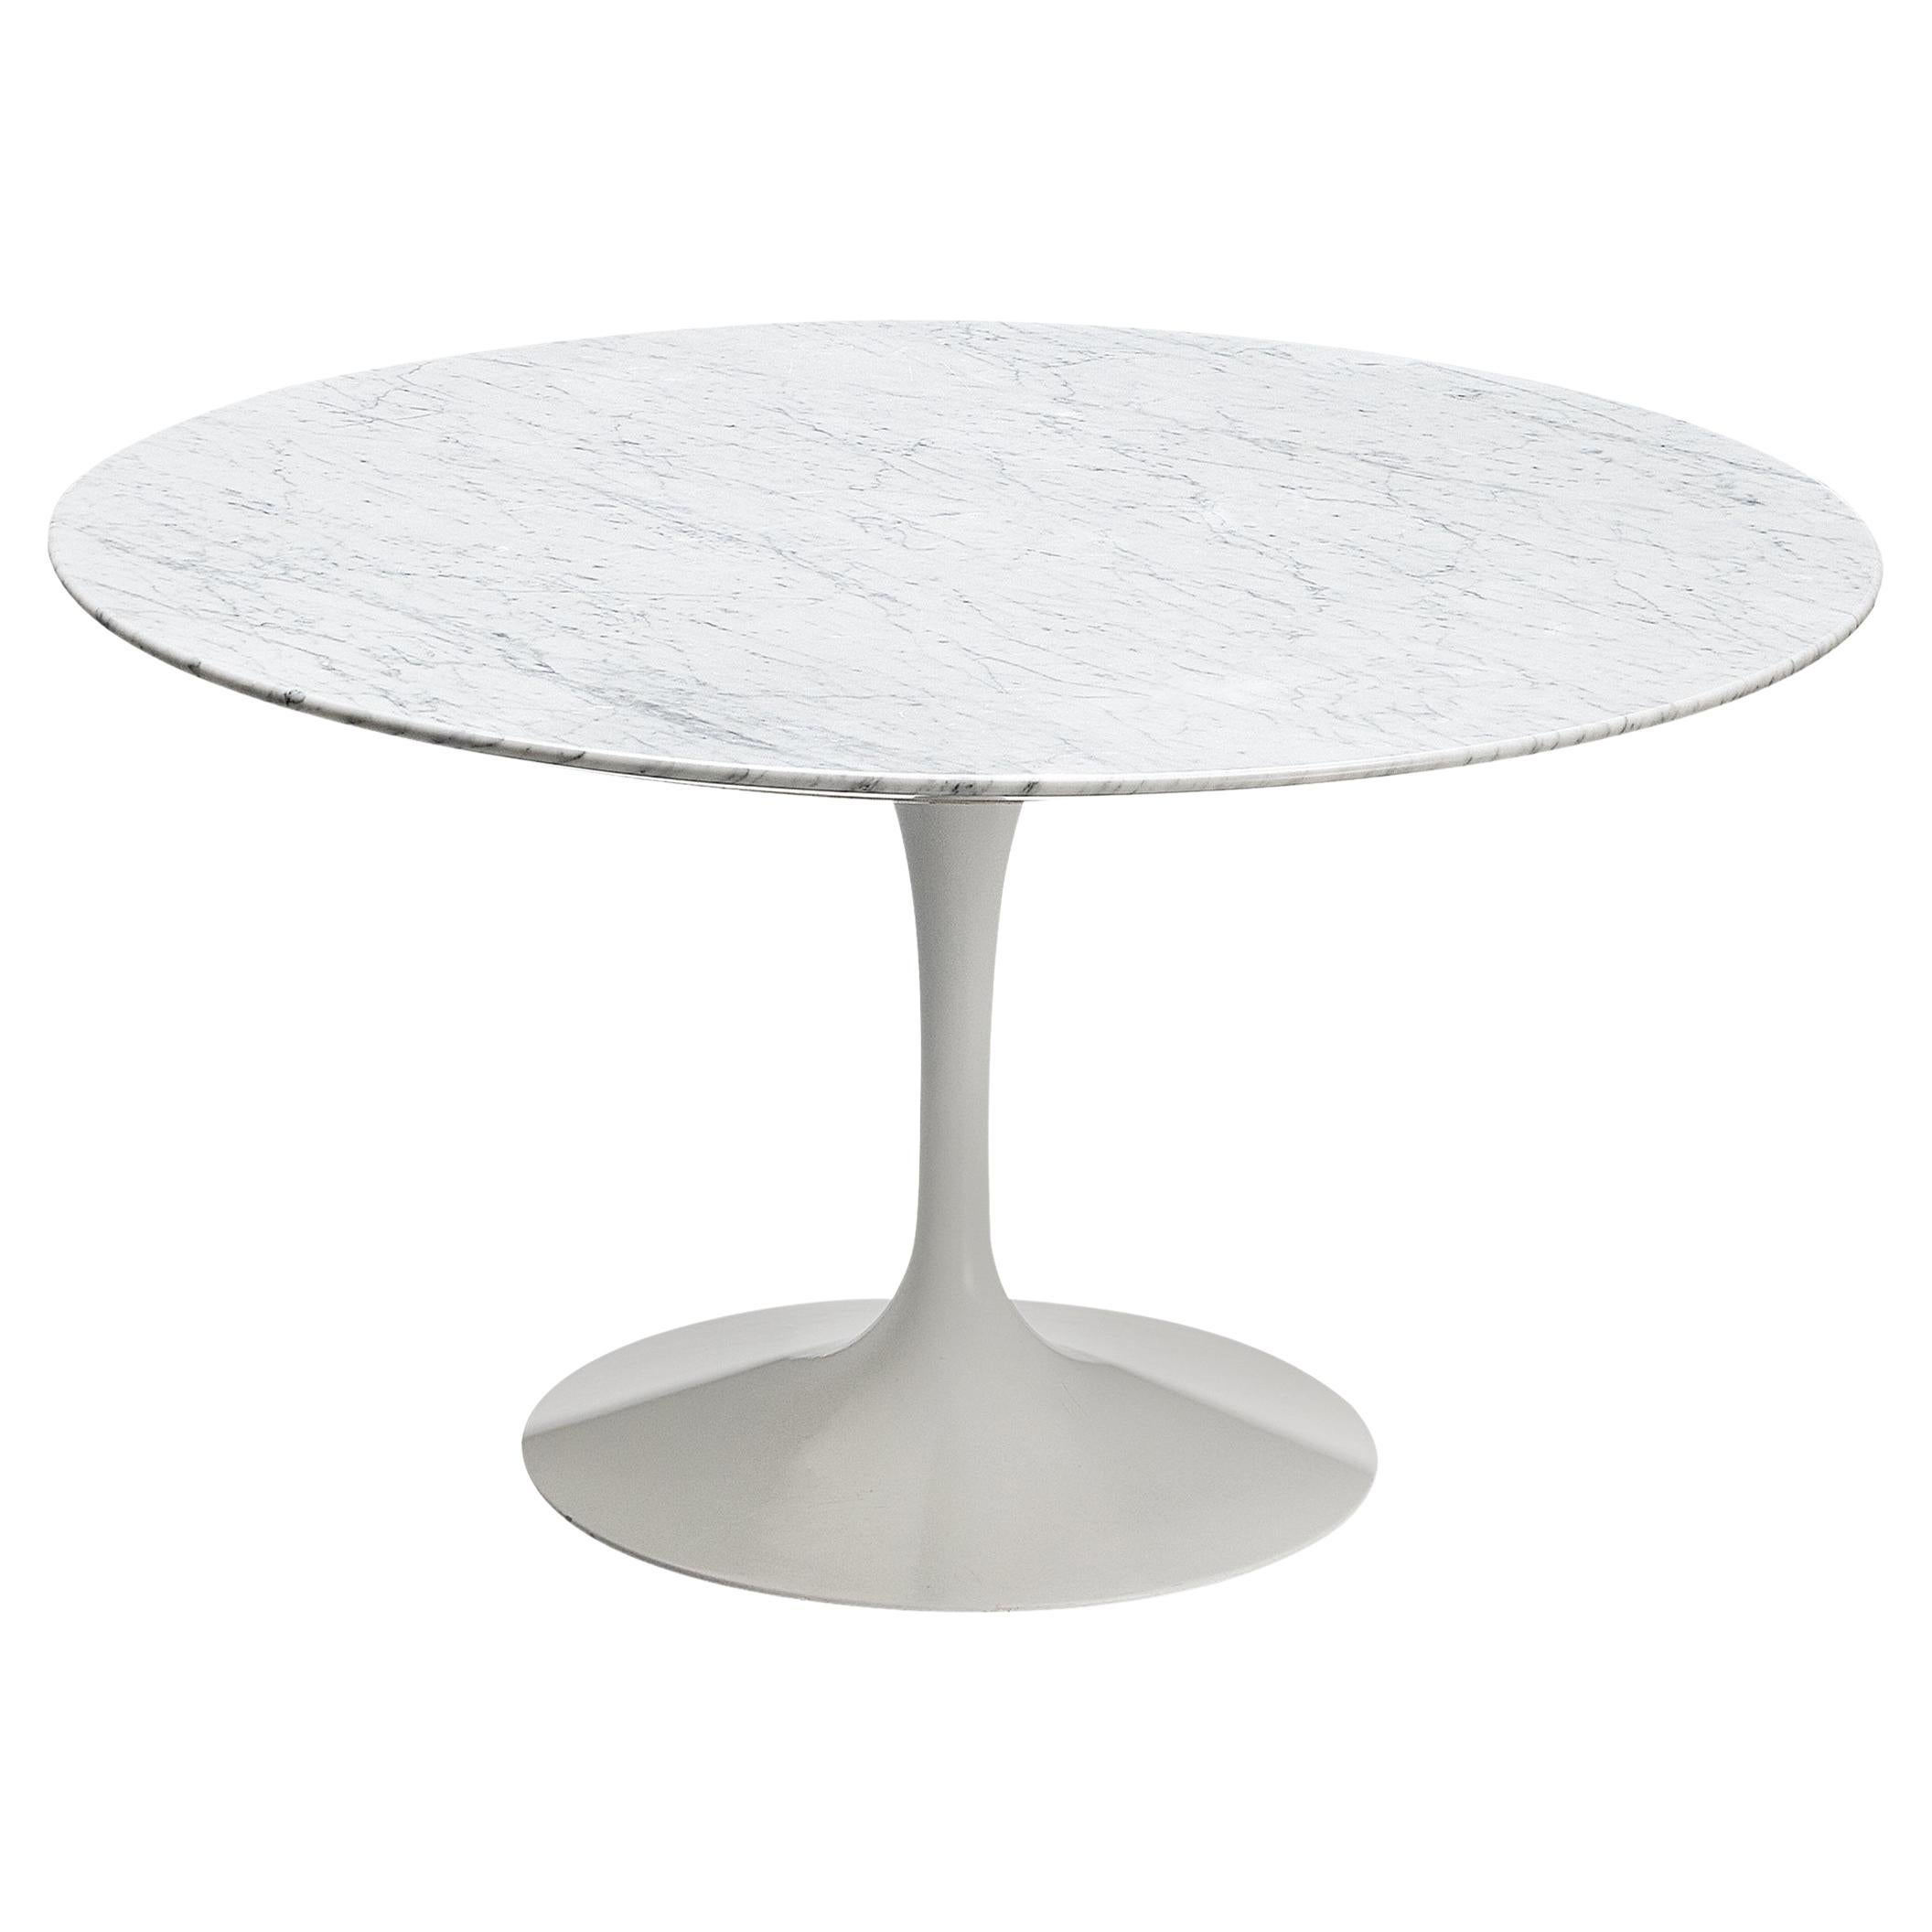 Eero Saarinen for Knoll 'Tulip' Dining Table with Marble Top